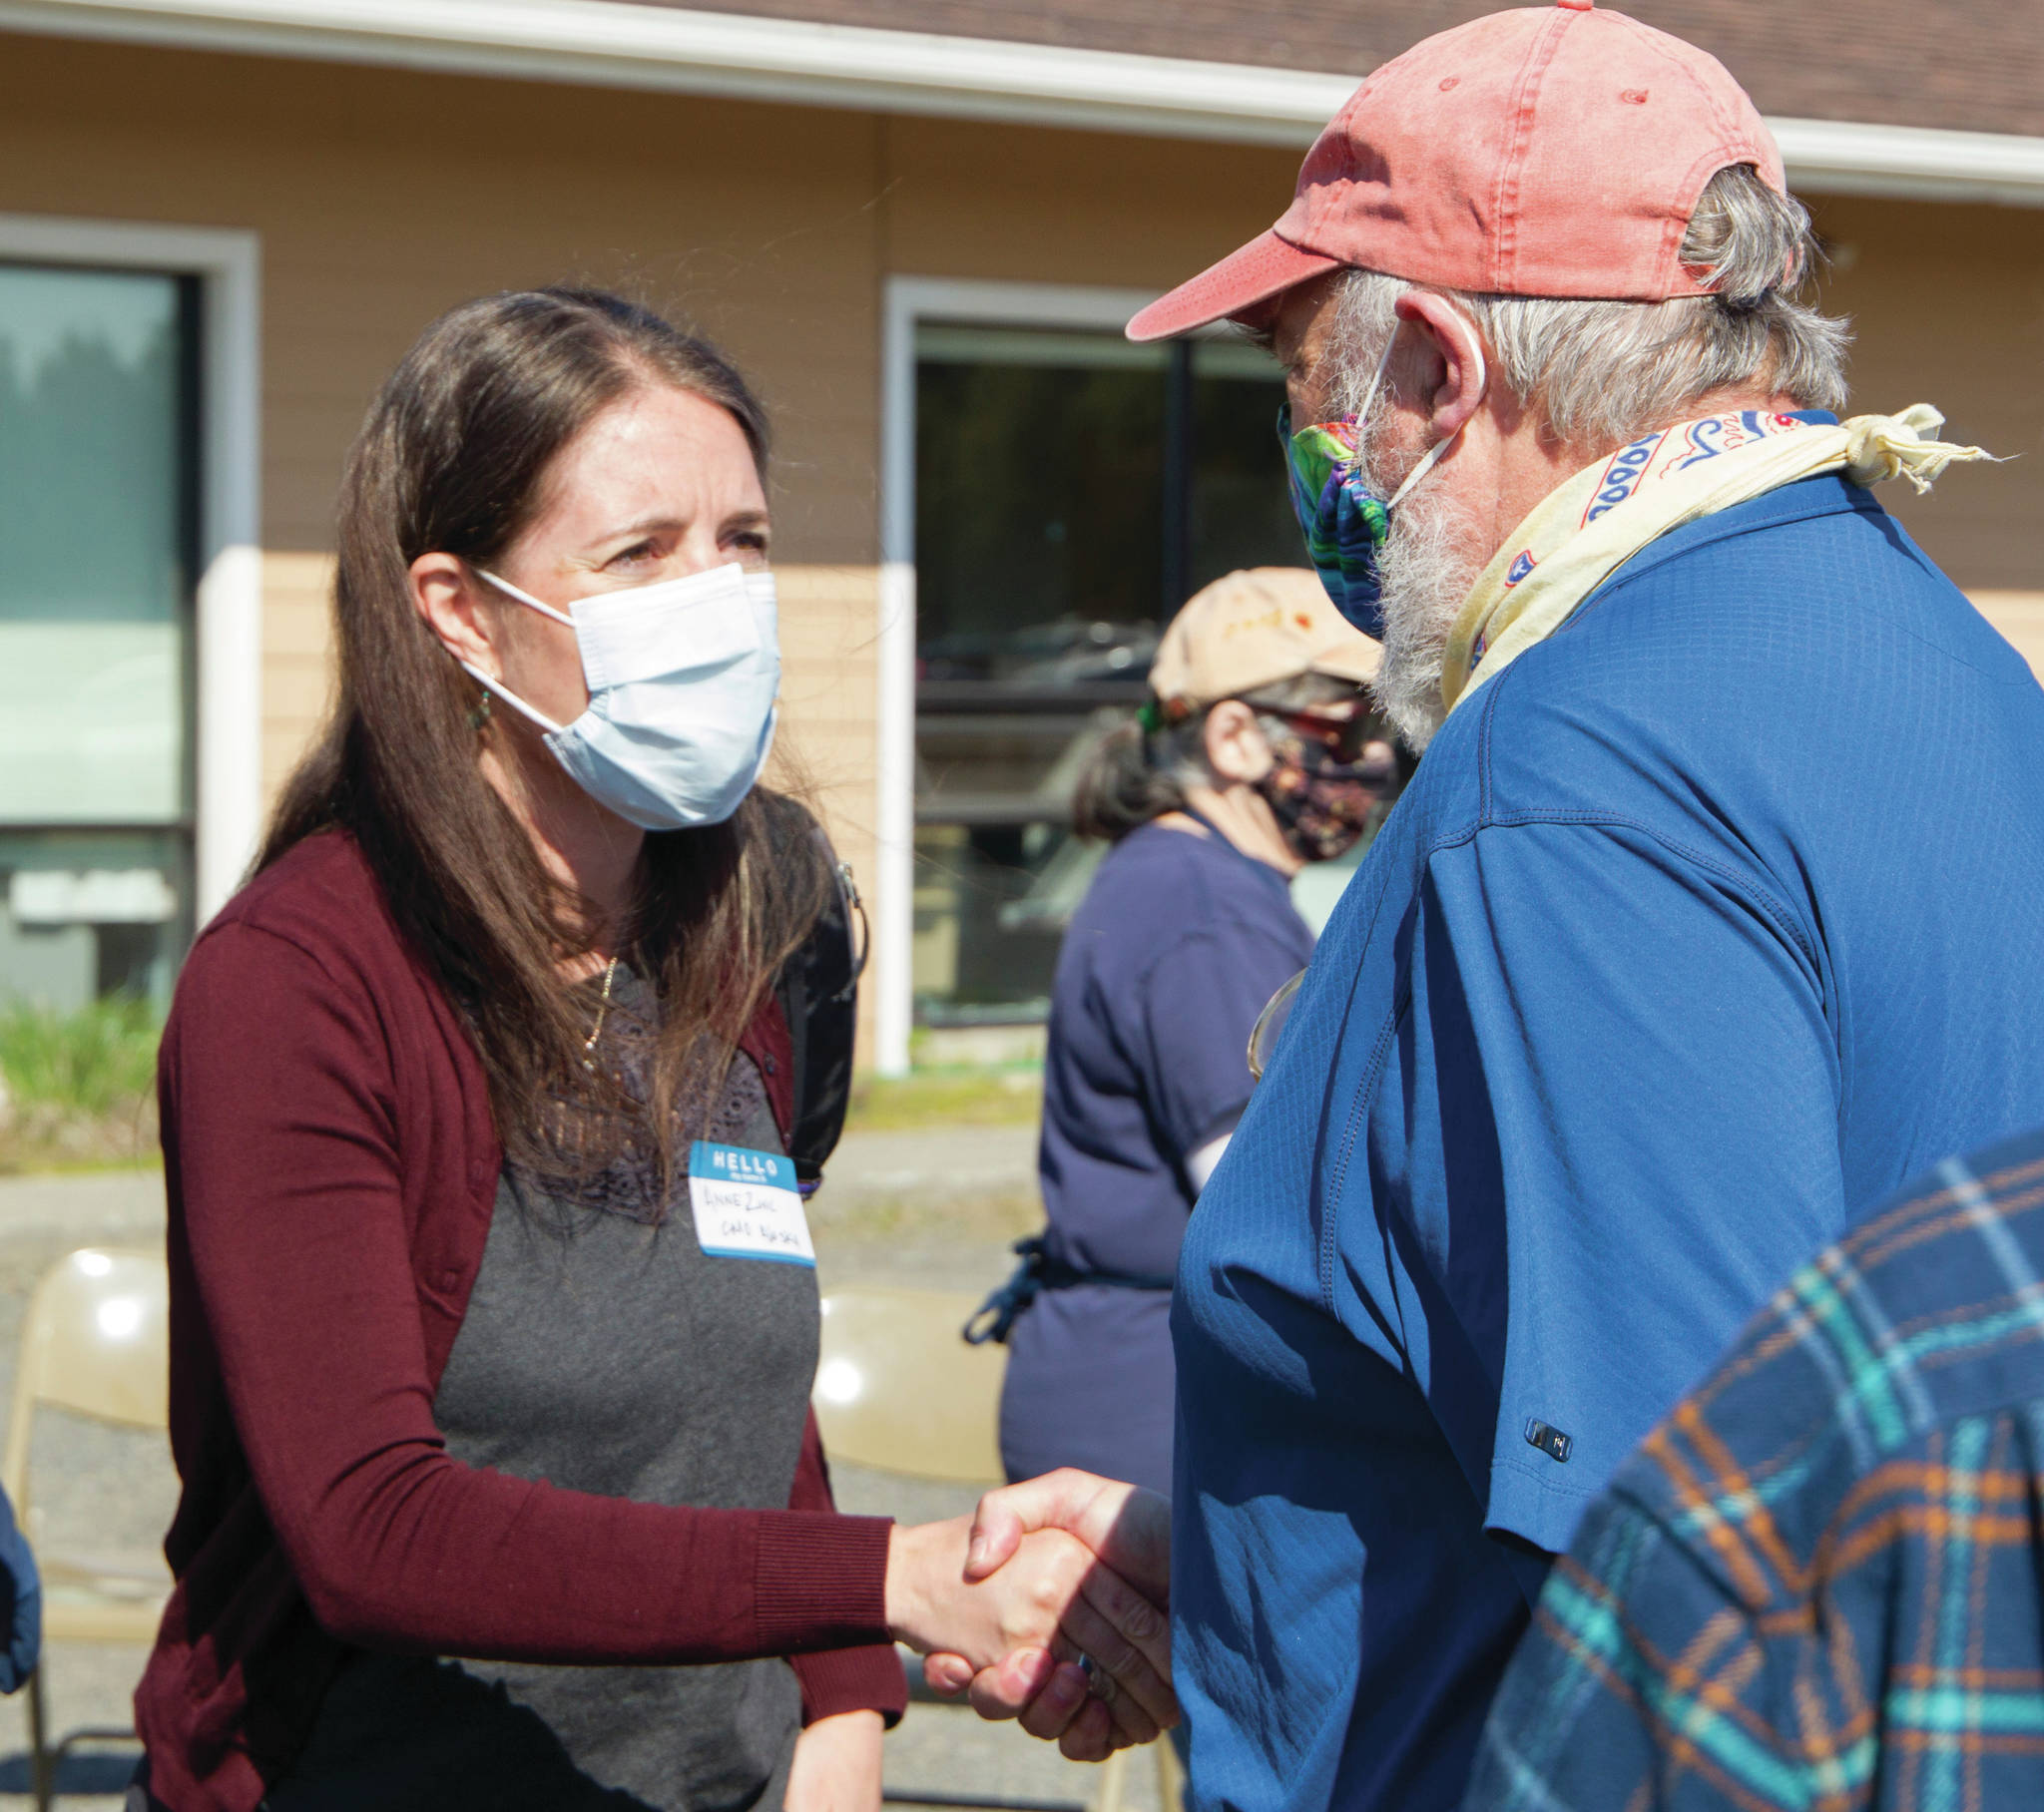 Alaska Chief Medical Officer Anne Zink, M.D., left, meets Homer Mayor Ken Castner, right, at a meet-and-greet on Thursday, May 27, 2021, at the Homer Public Health Center in Homer, Alaska. (Photo by Sarah Knapp/Homer News)